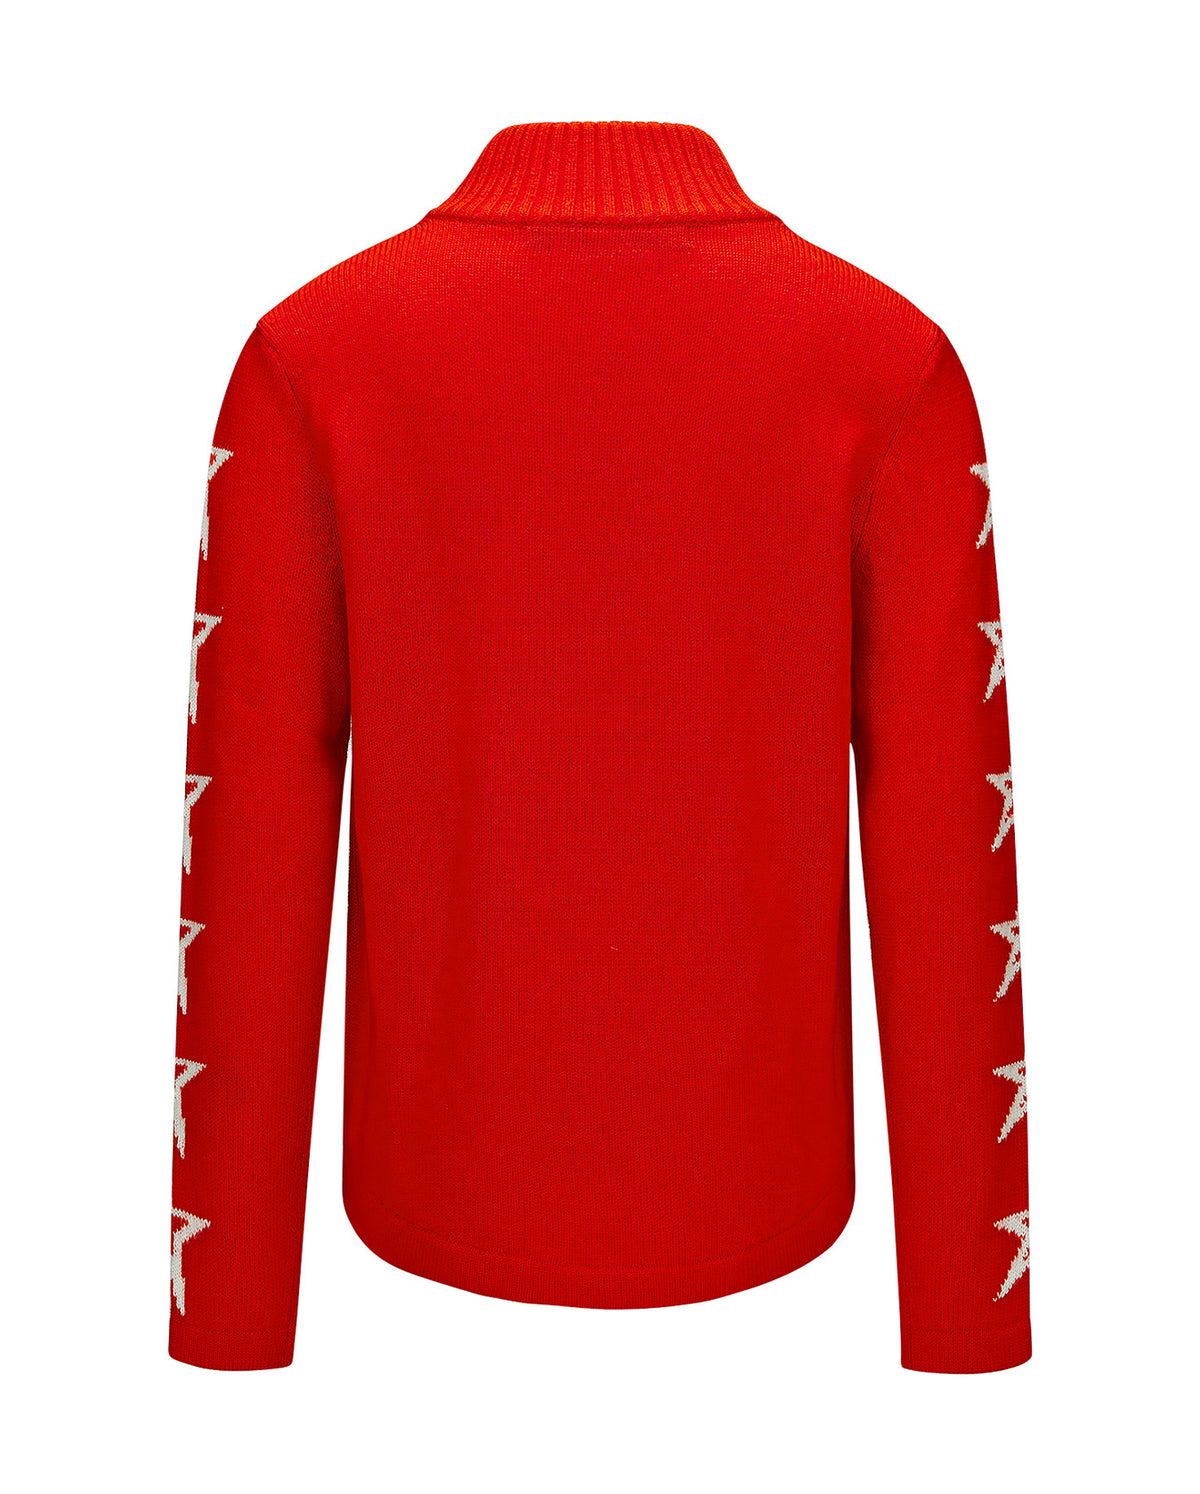 Star Half Zip Sweater - Red